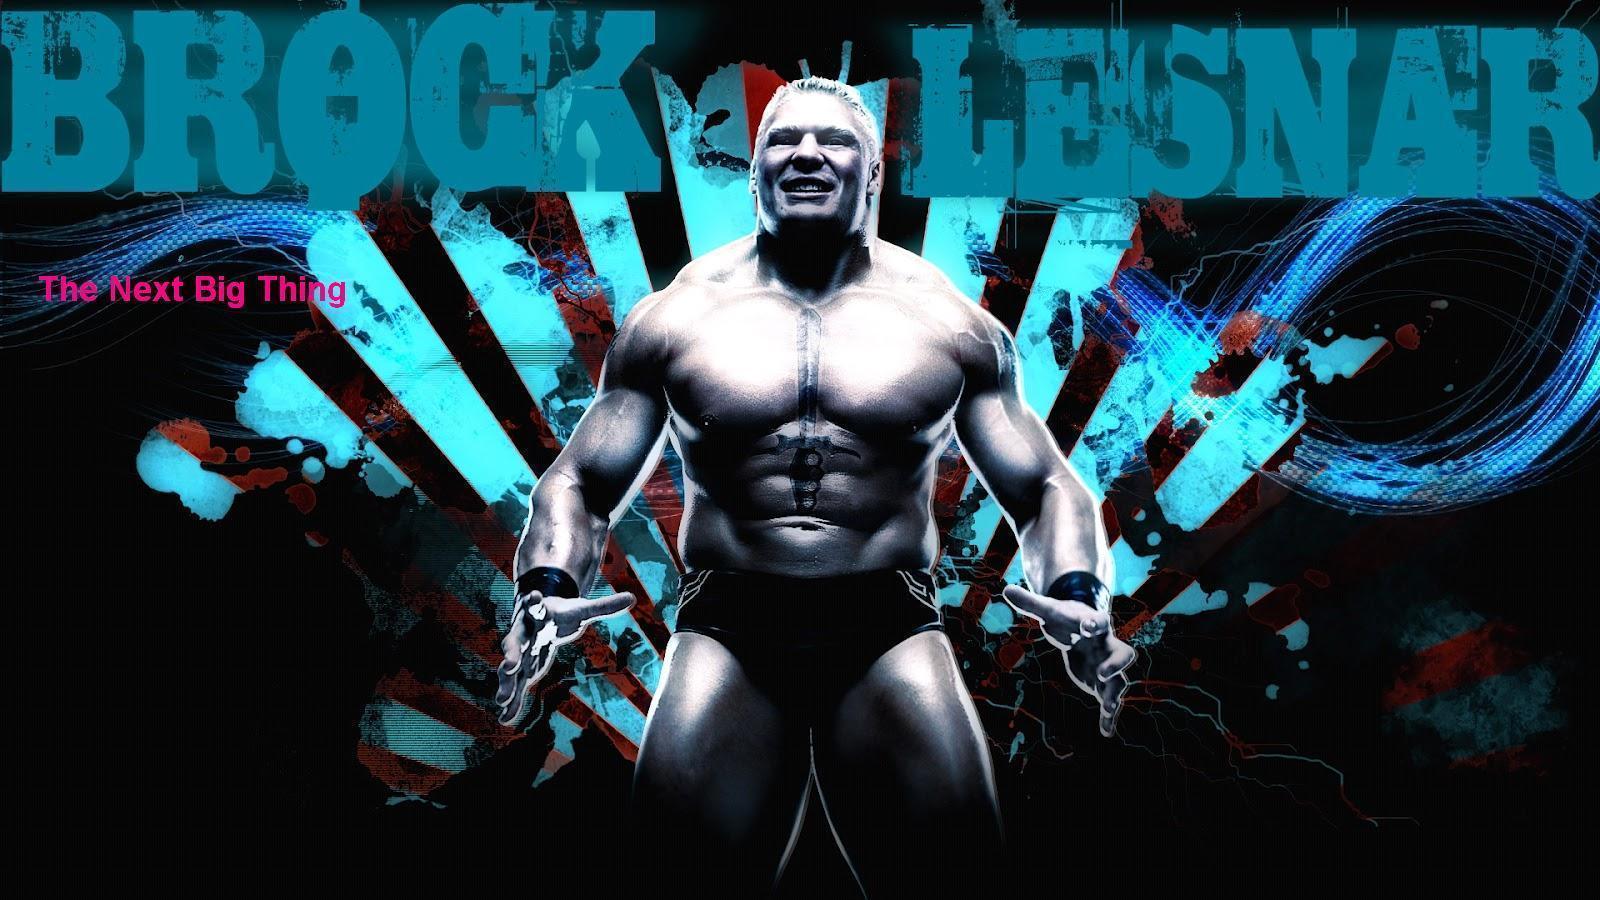 WWE Brock Lesnar HD Wallpaper 2012 Updated Mobile Drivers l